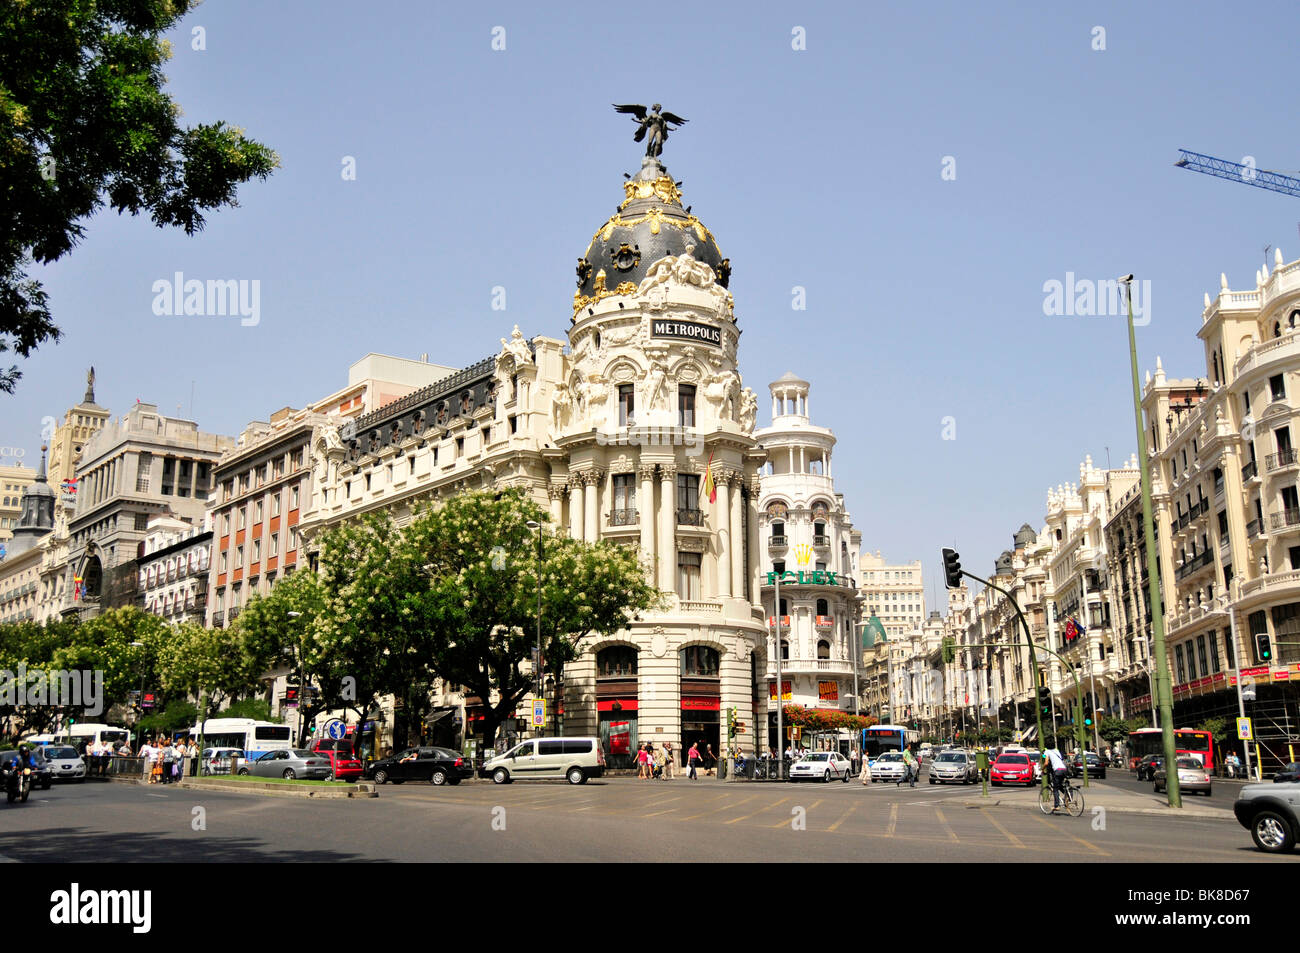 Metropolis Building, 1910, Edificio Metrópolis, on the Gran Vía with its monumental angel statue, Madrid, Spain, Iberian Penins Stock Photo